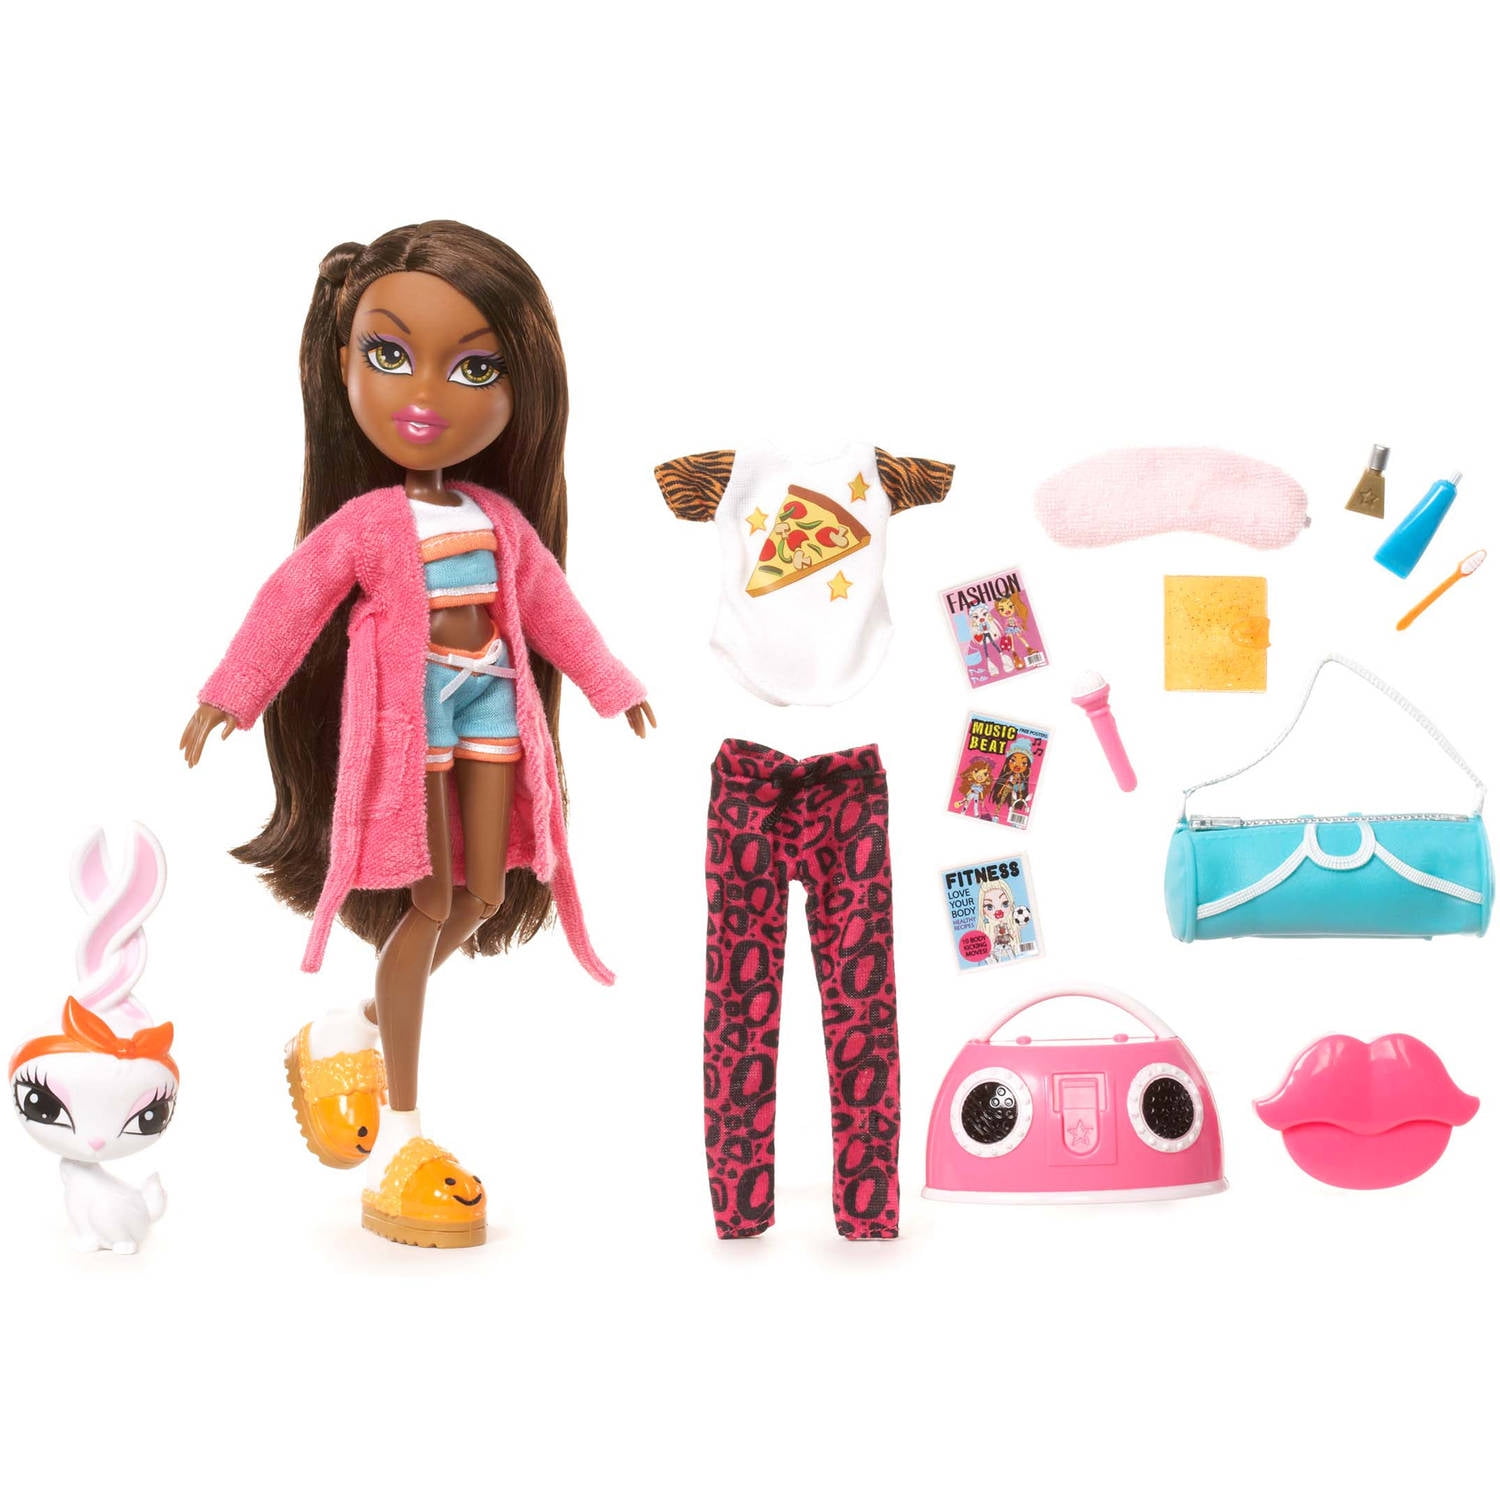 Bratz Sleepover Party Doll, Sasha, Great Gift for Children Ages 6, 7, 8+